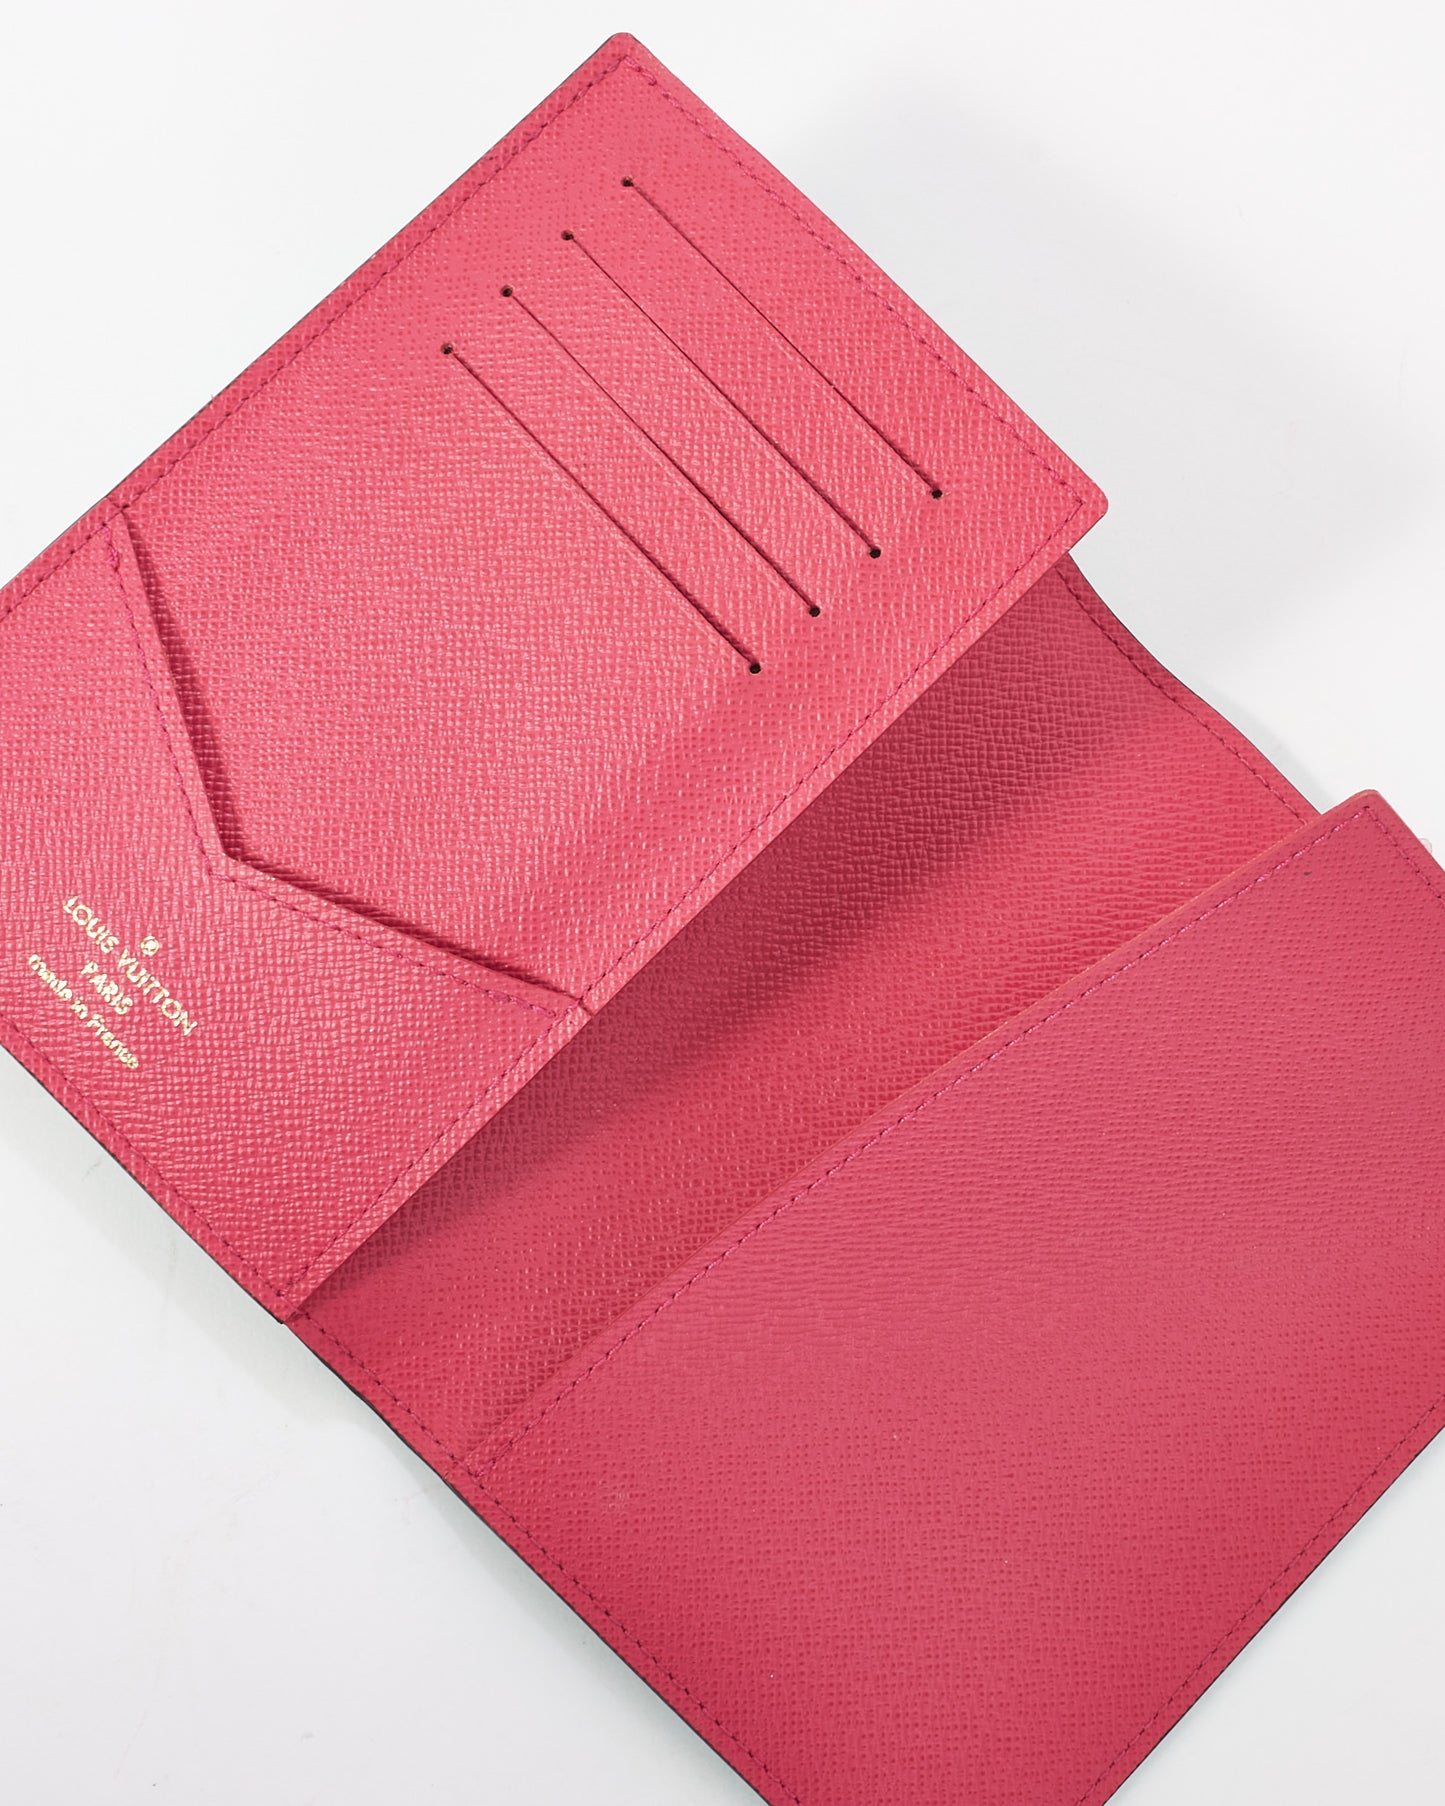 Louis Vuitton Monogram World Passport Cover